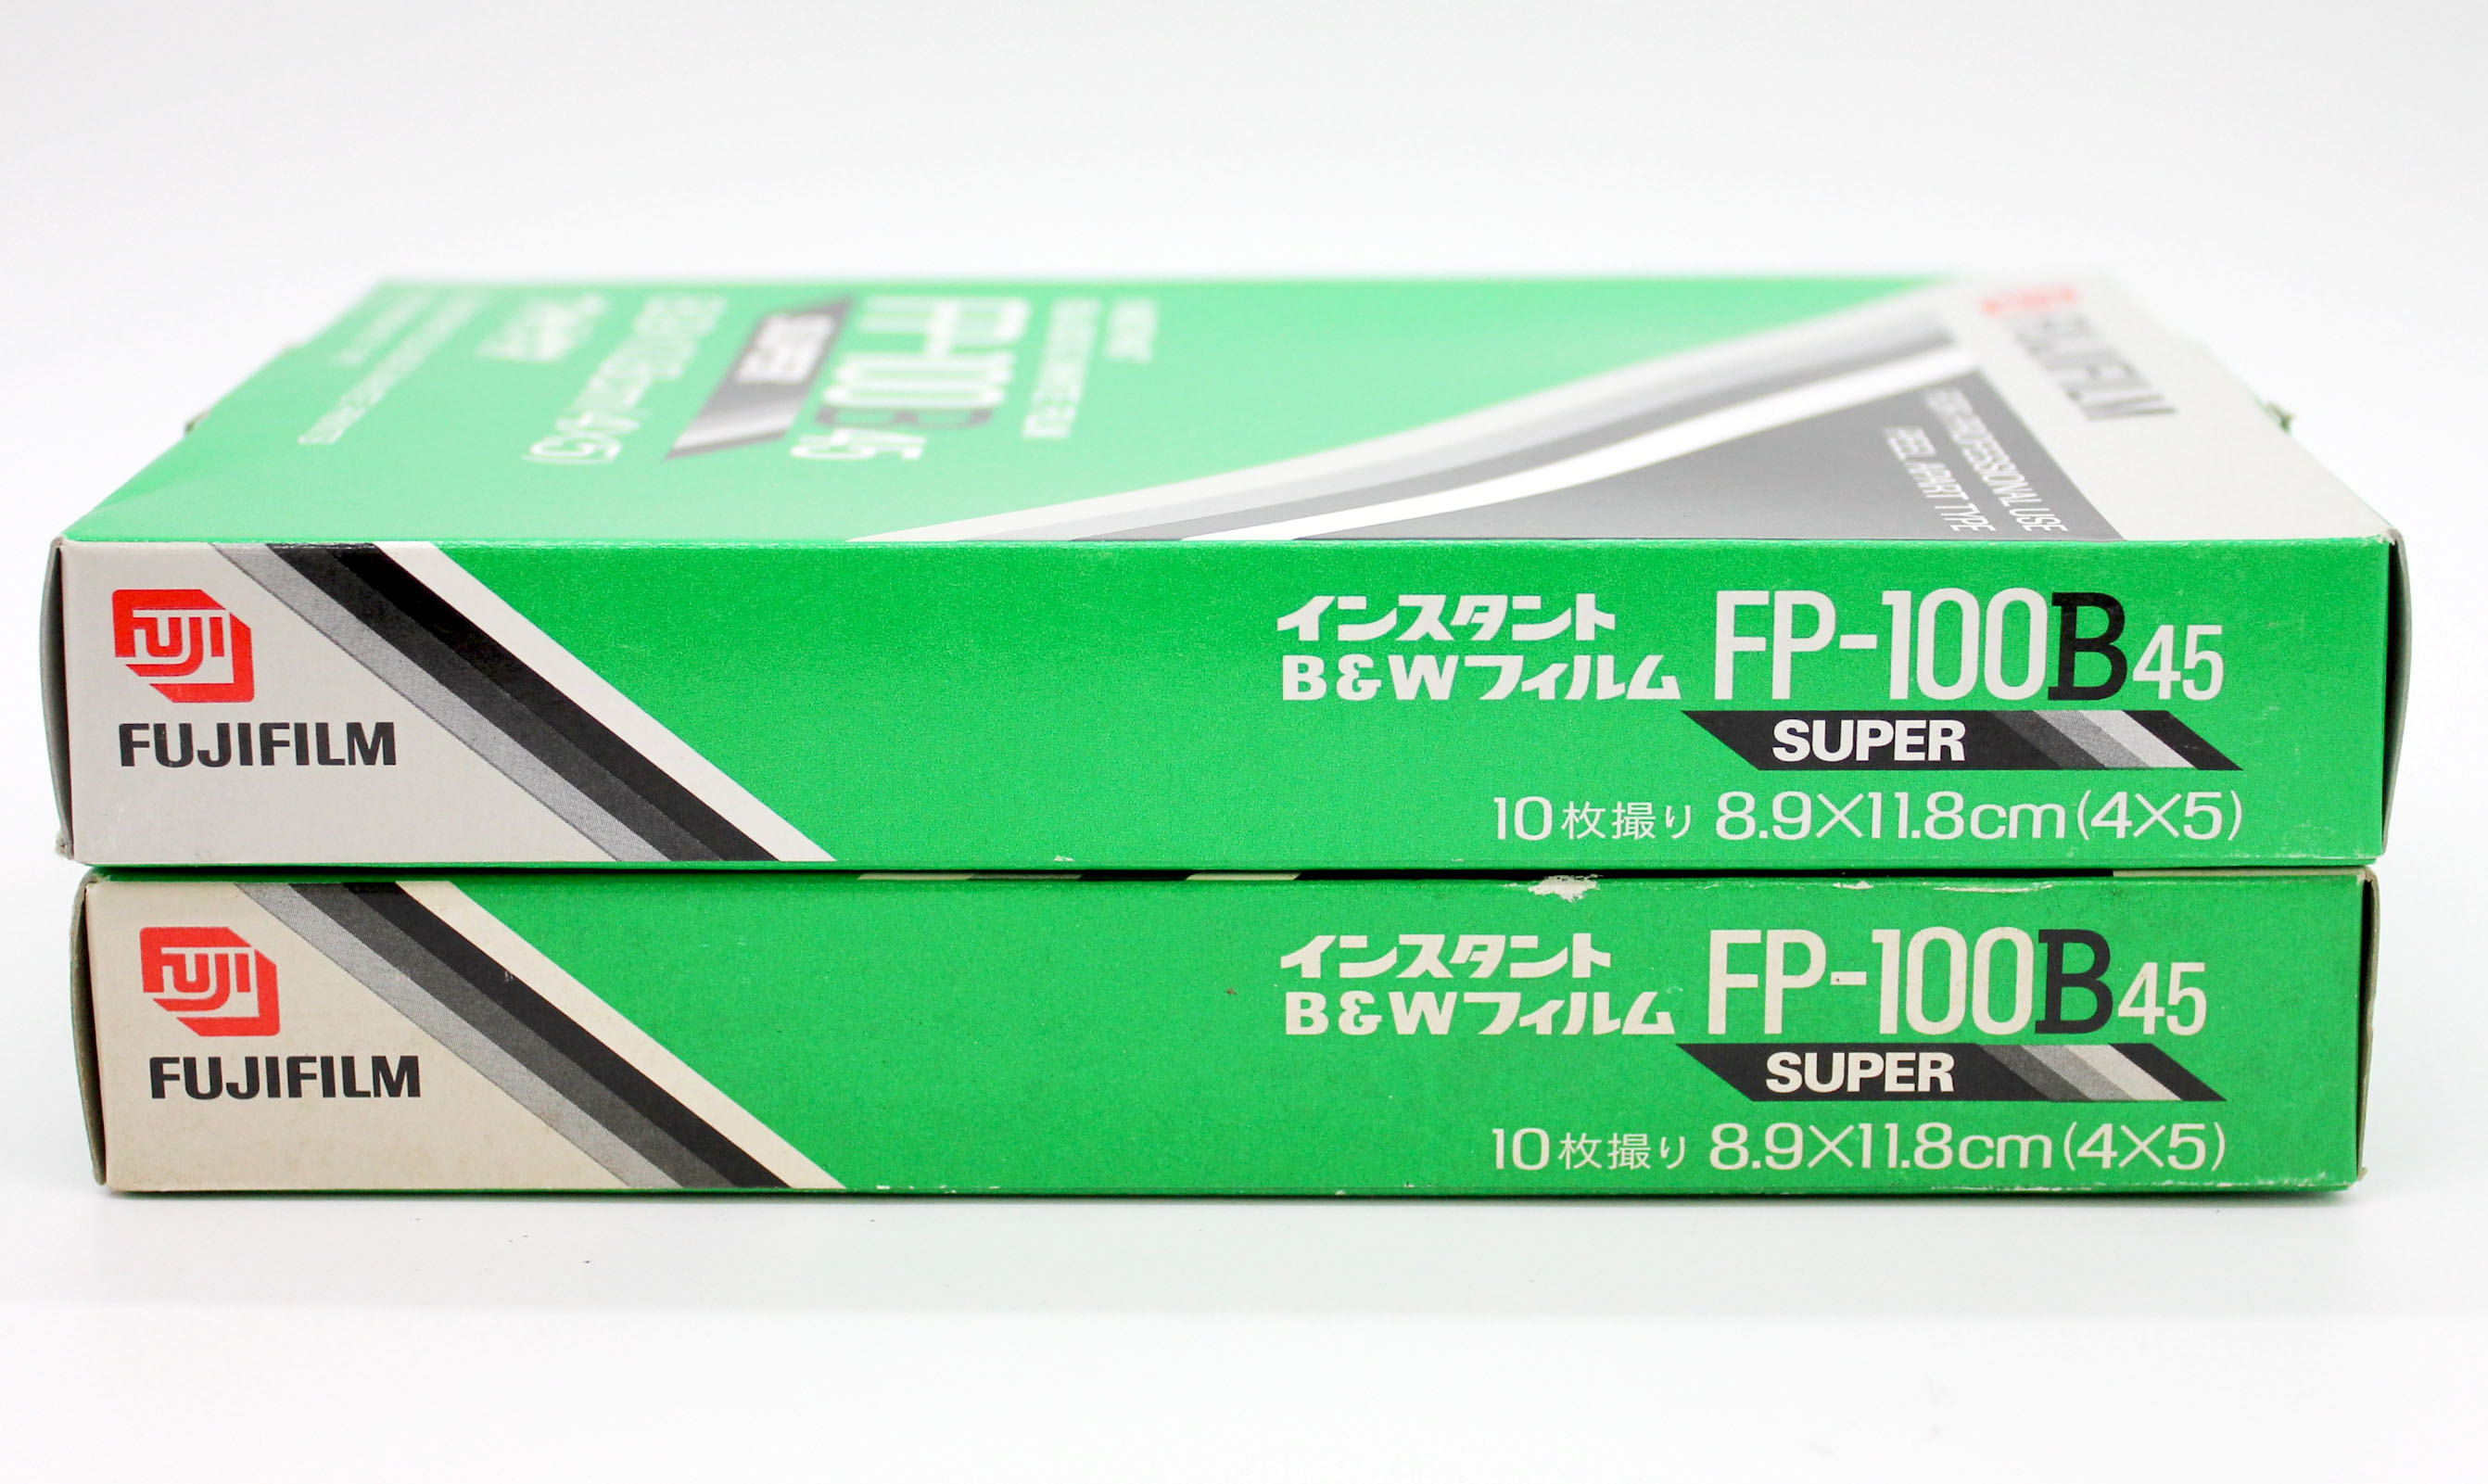  Fuji Fujifilm FP-100B45 4x5 8.9x11.8cm Instant Black & White Film Set of 2 (Expired) Photo 5